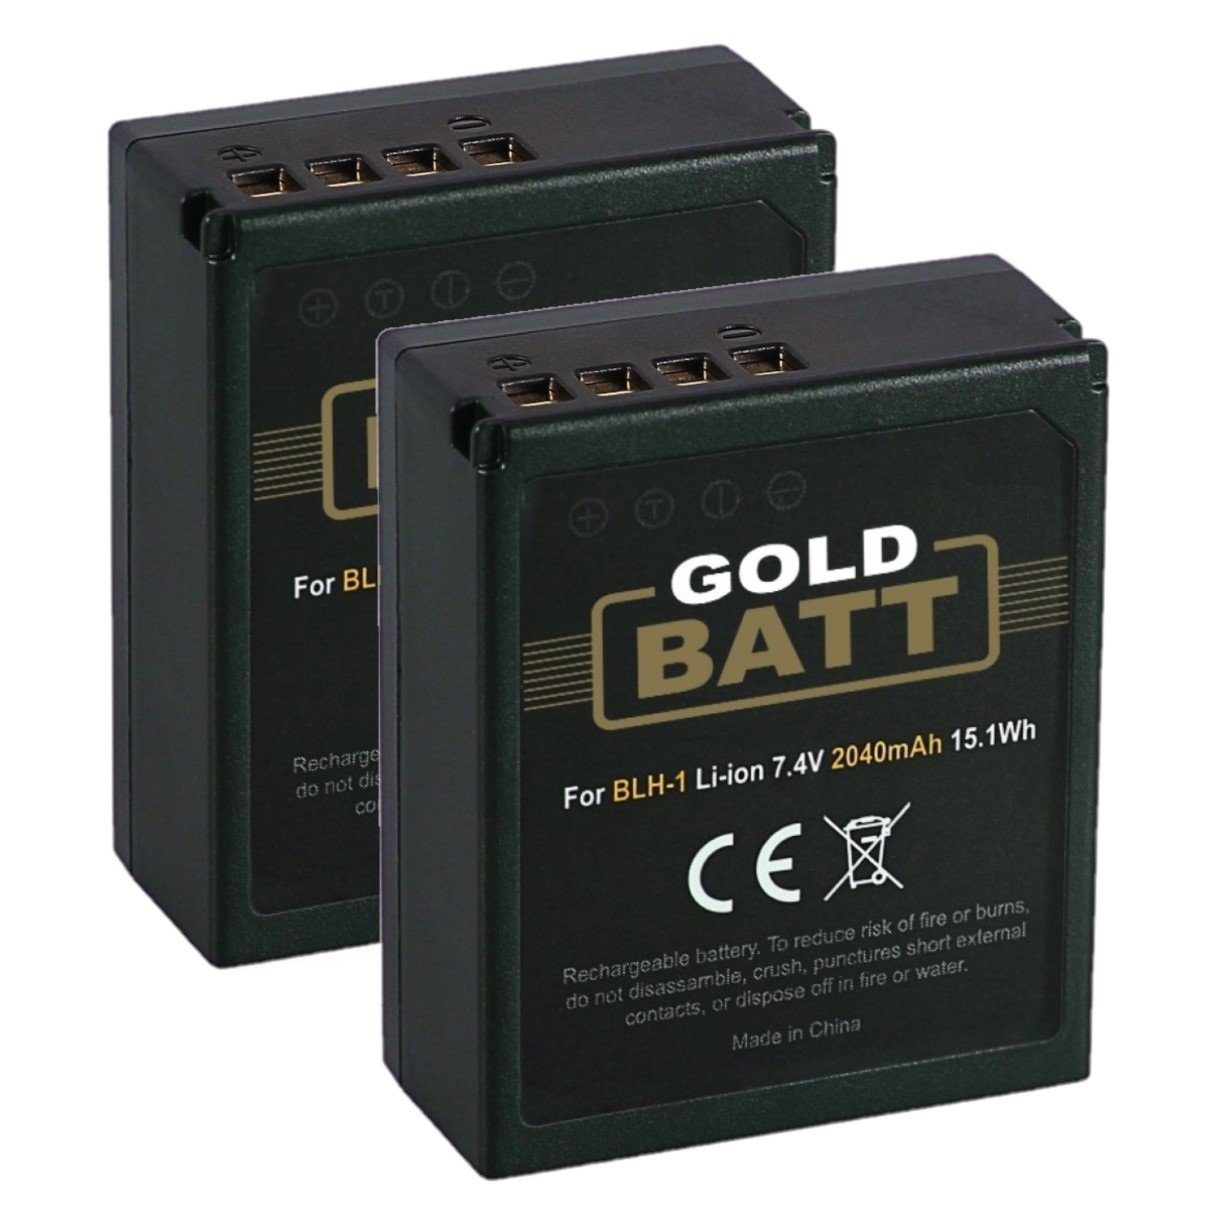 GOLDBATT 2x Akku für Olympus BLH-1 BLH1 OM-D EM-1 Mark II EM1 Mark 2 E-M1X volldecodiert Kamera-Akku Ersatzakku Ersatz 2040 mAh (7,4 V, 2 St), 100% kompatibel I inklusive Überhitzungsschutz